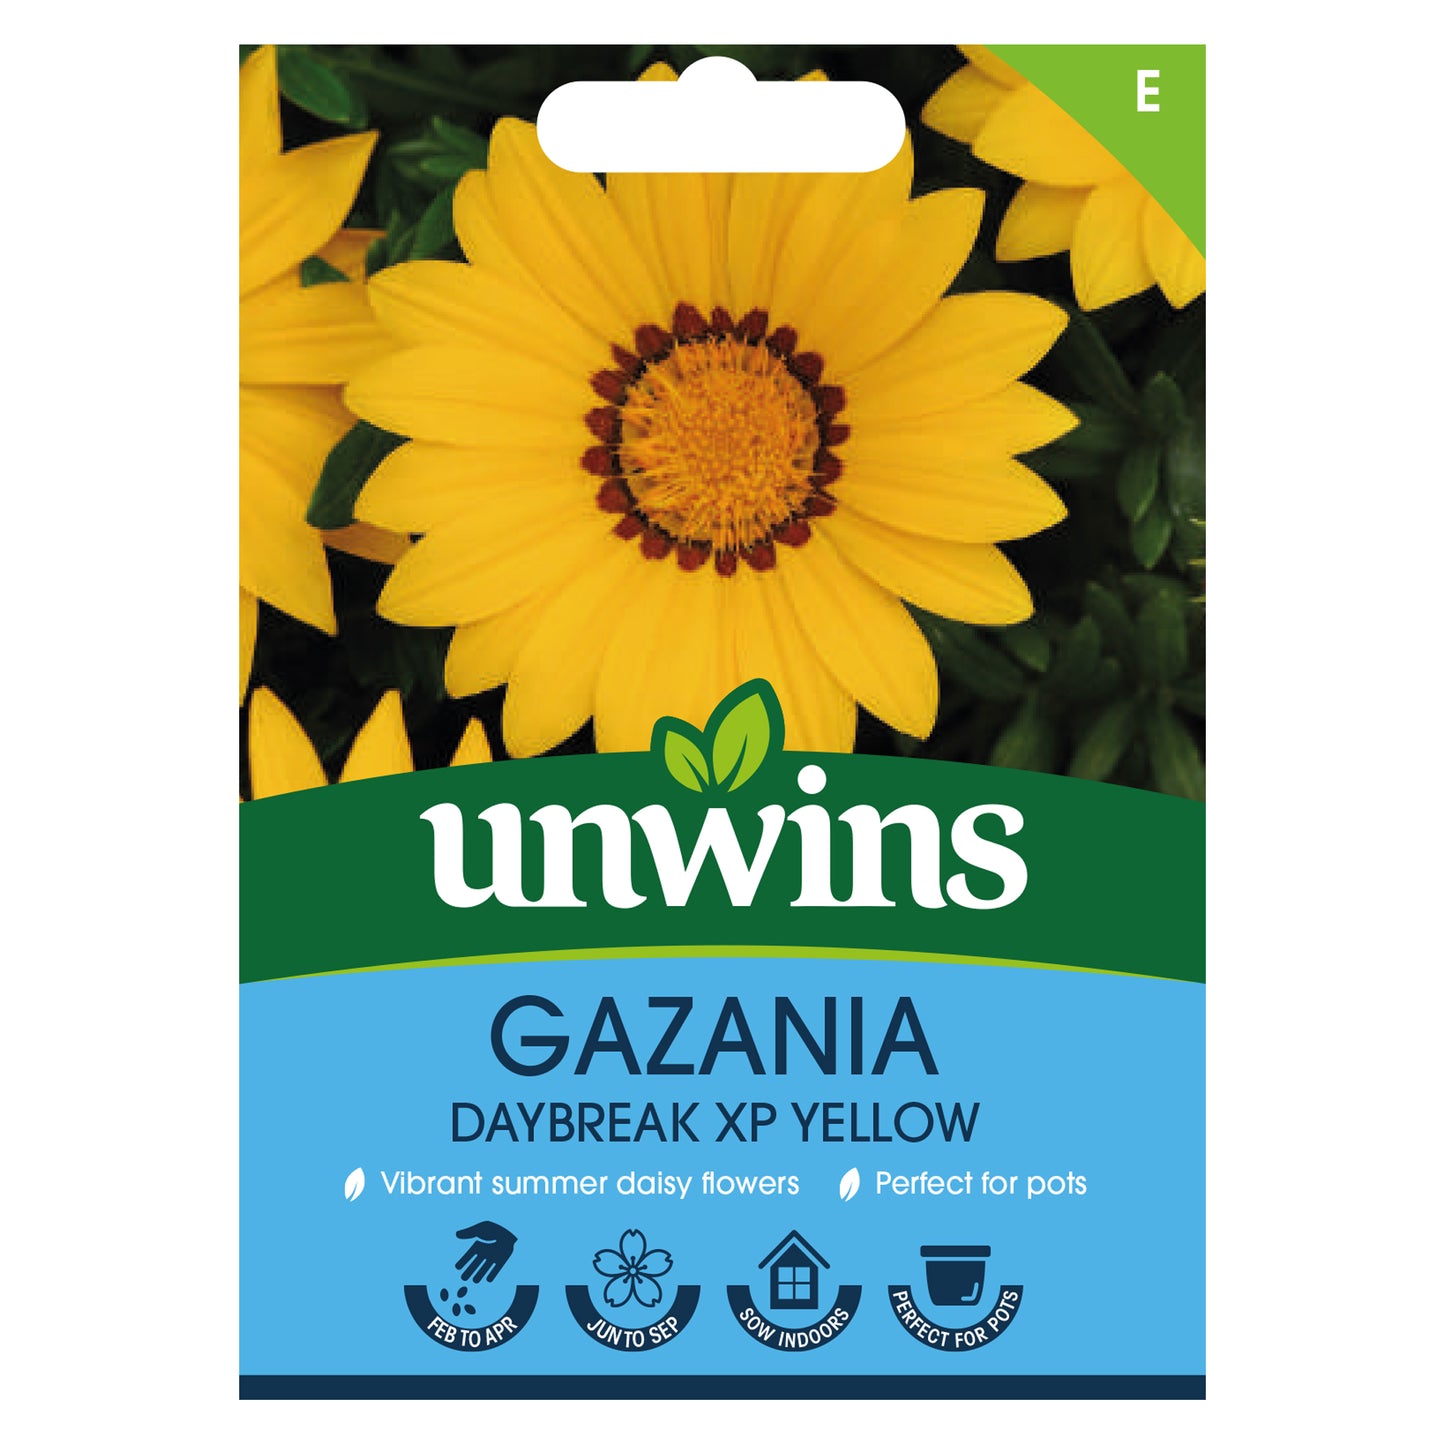 Unwins Gazania Daybreak XP Yellow Seeds front of pack